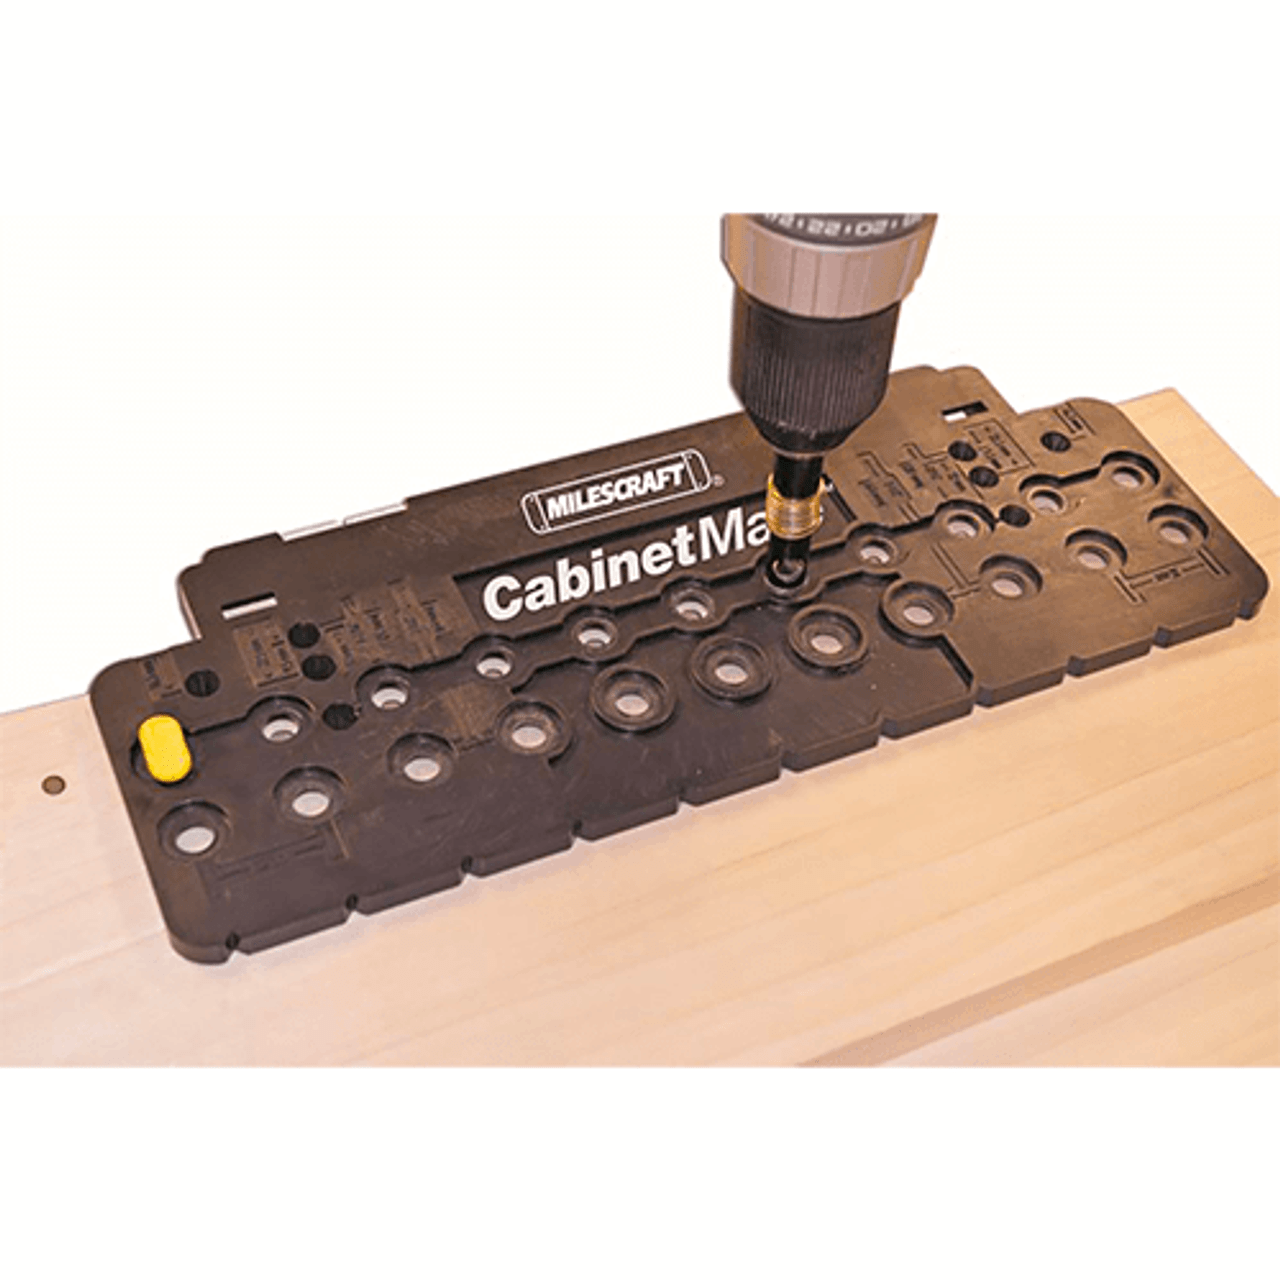 Milescraft 1316 Cabinet Mate- Shelf Pin Drilling Jig